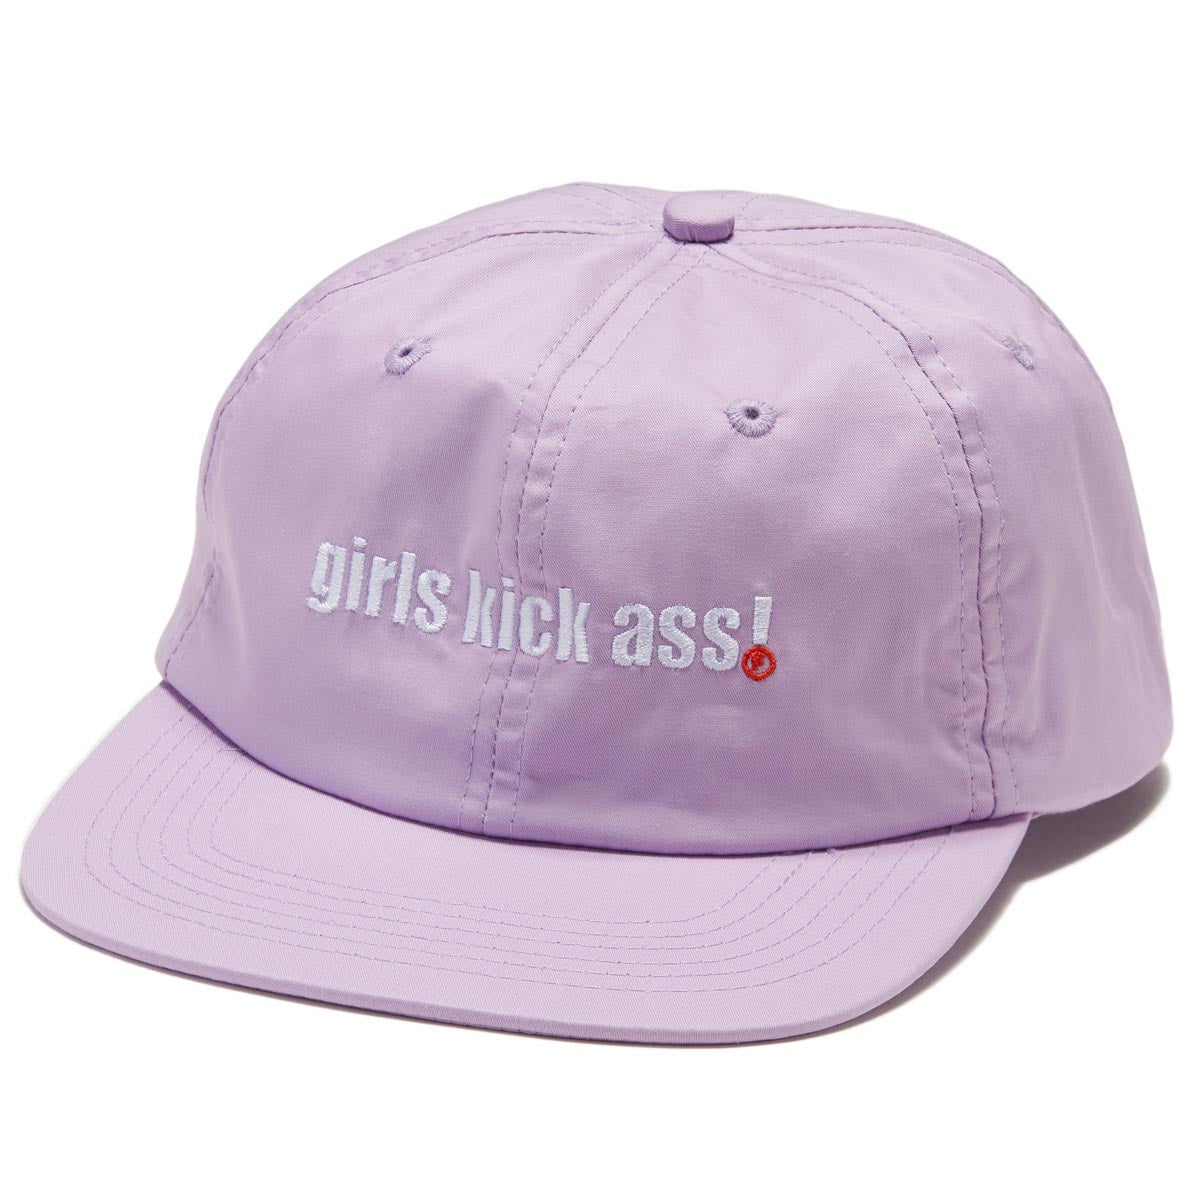 Foundation Girls Kick Ass Hat - Lavender image 1